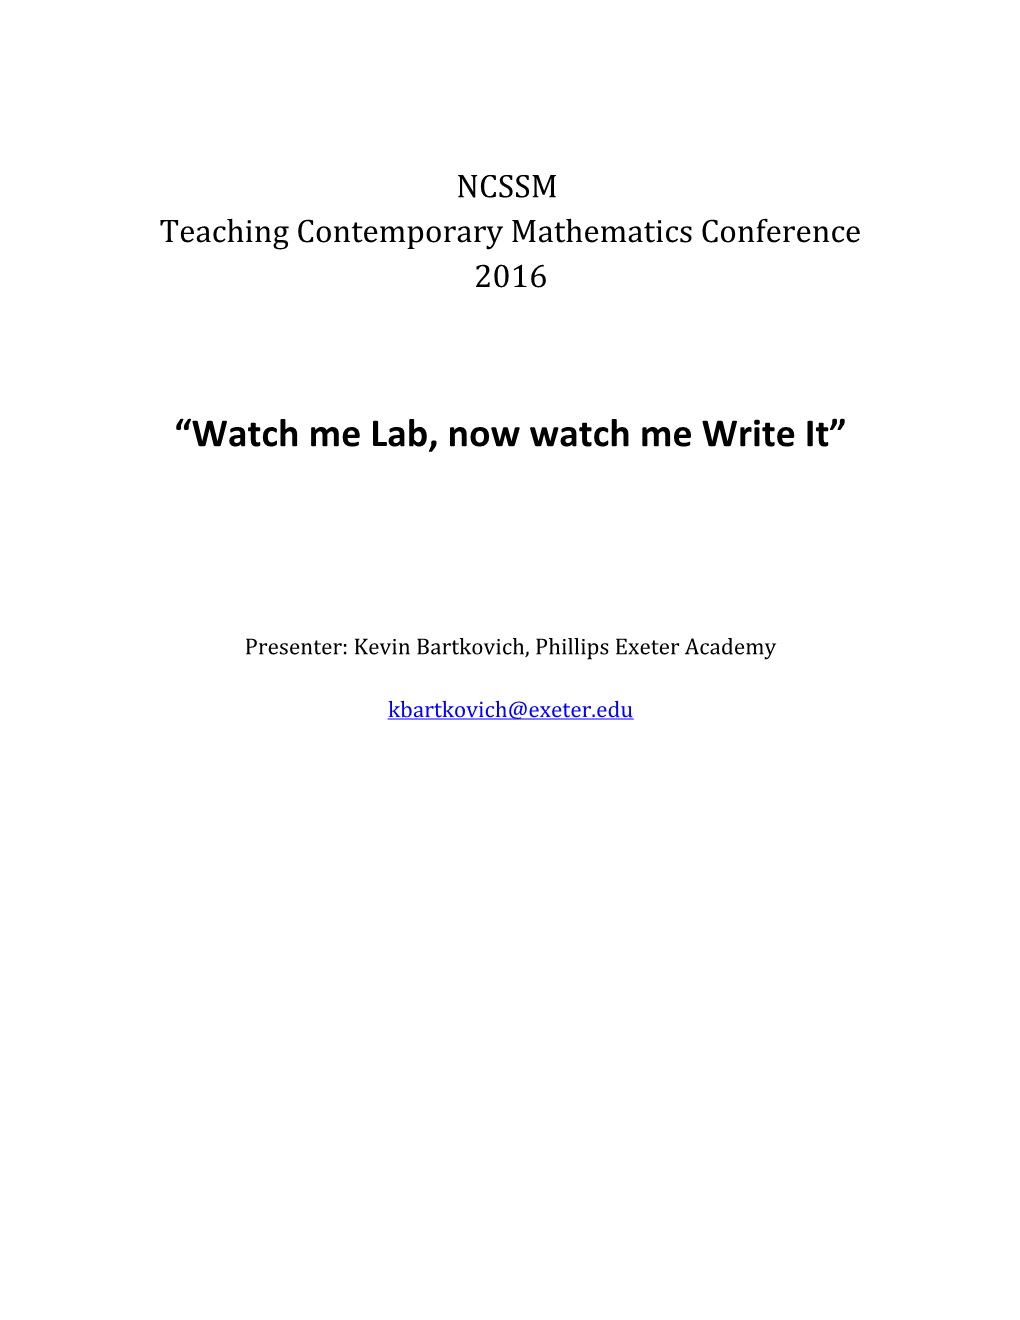 Teaching Contemporary Mathematics Conference 2016